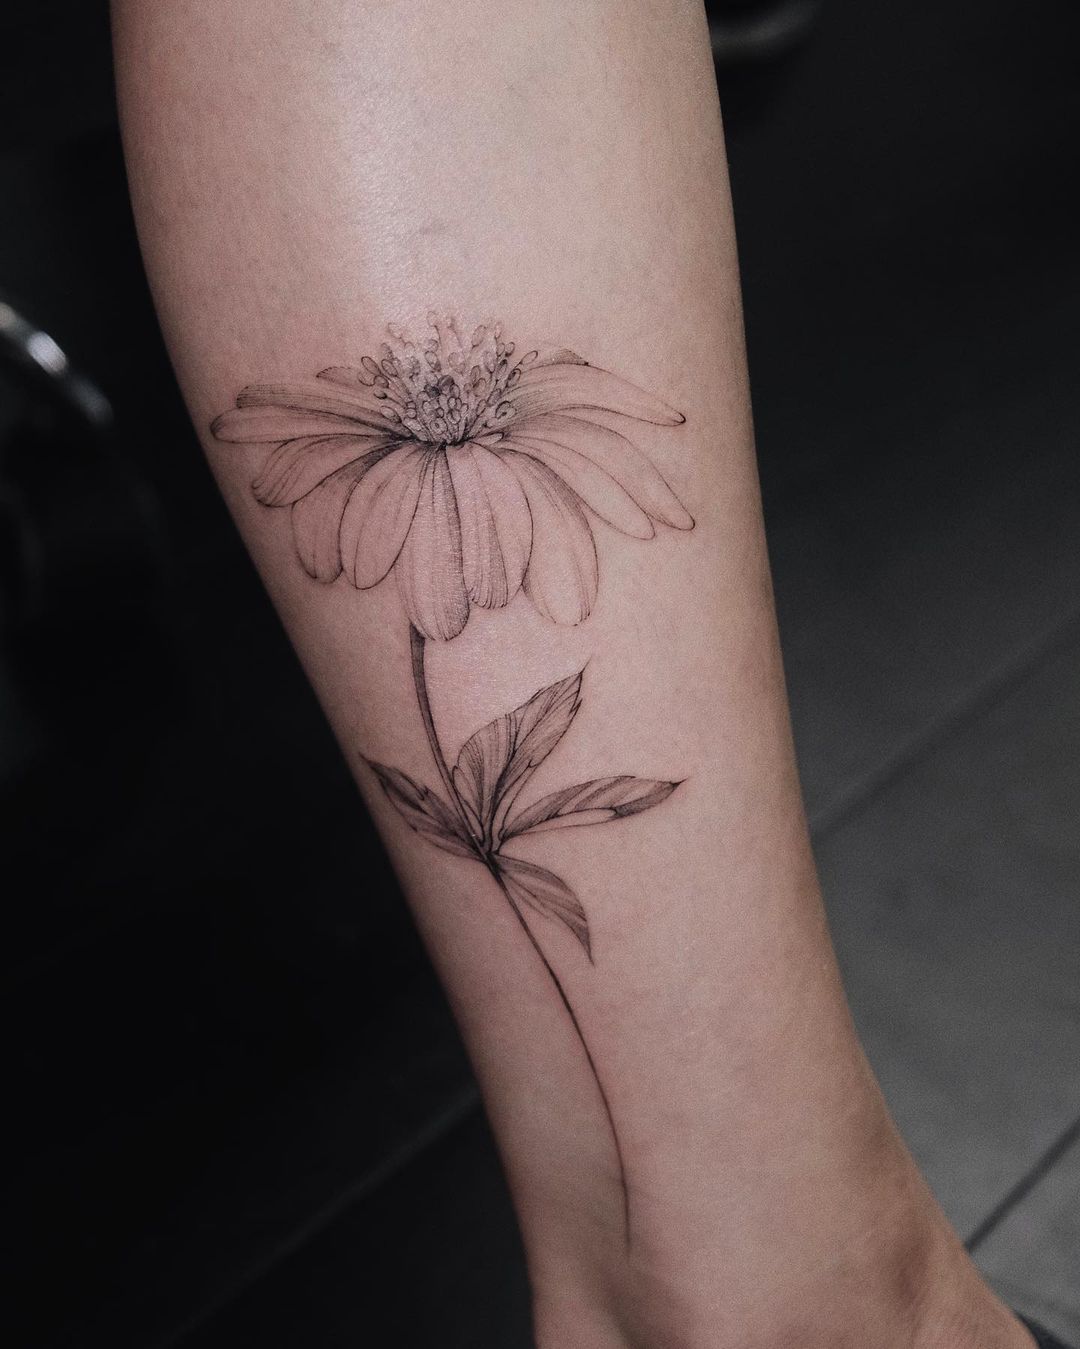 64 Inspiring Flower Tattoos To Come Up